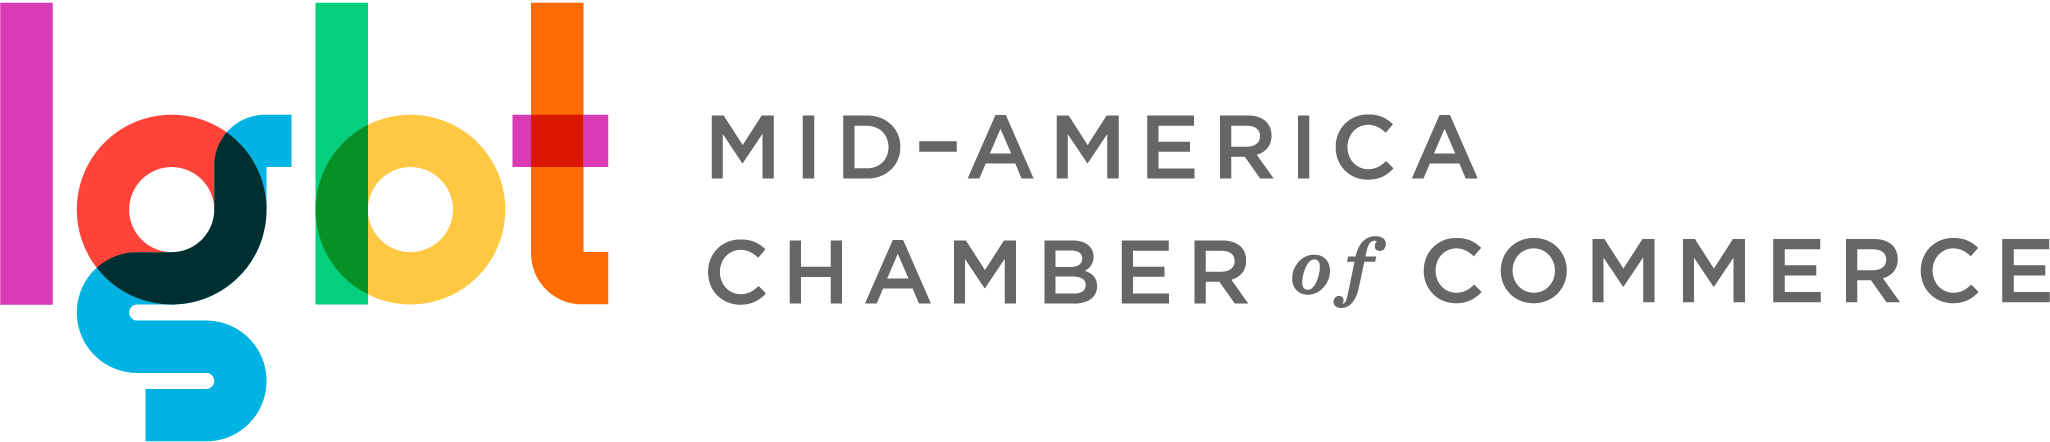 LBGT Mid-American Chamber of Commerce